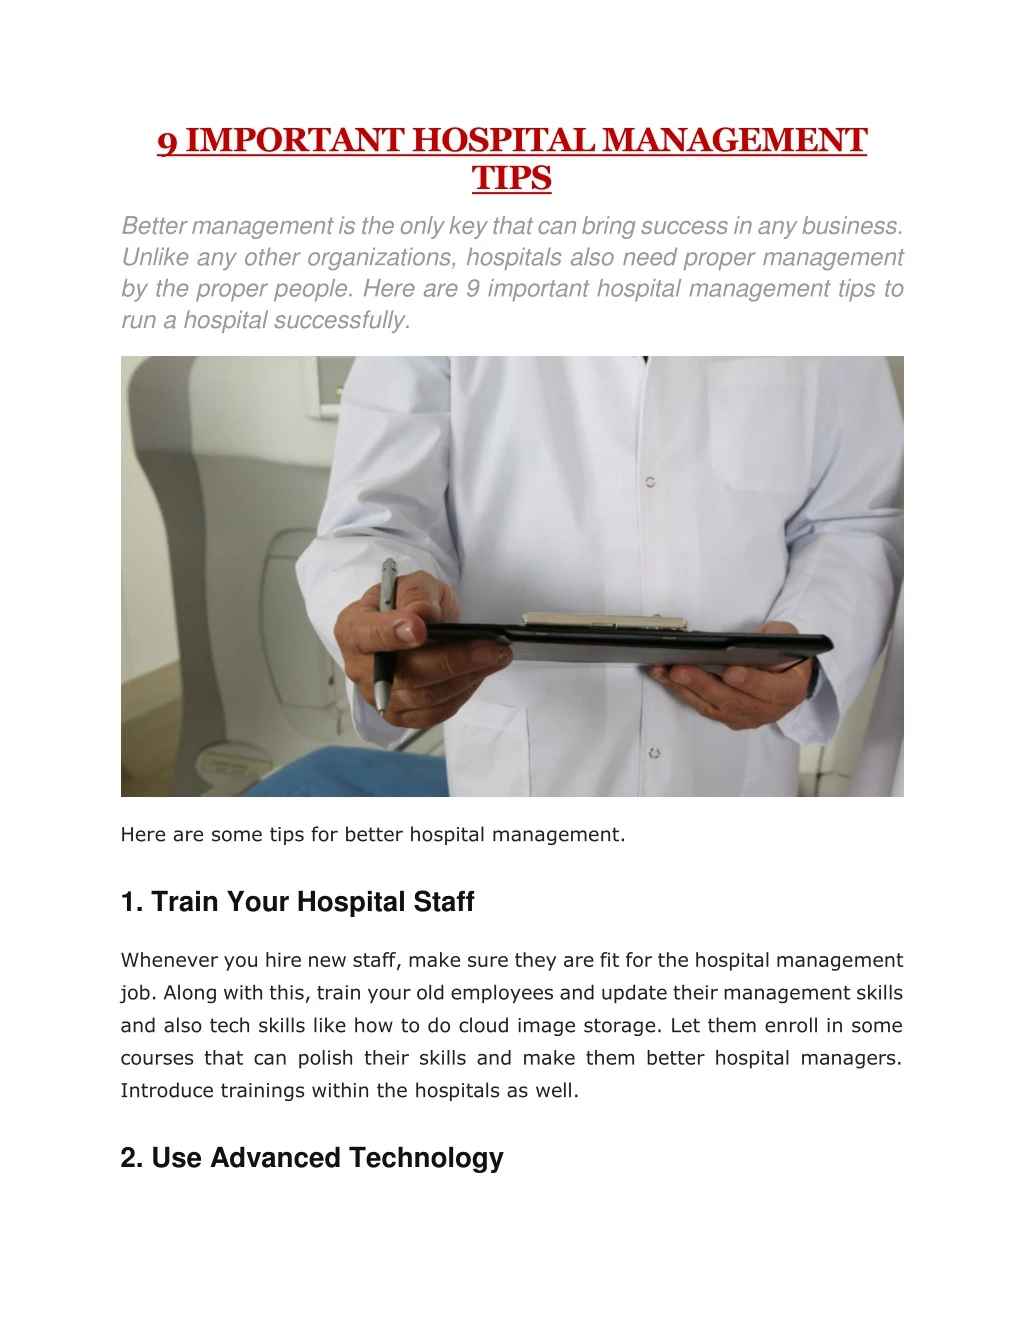 9 important hospital management tips